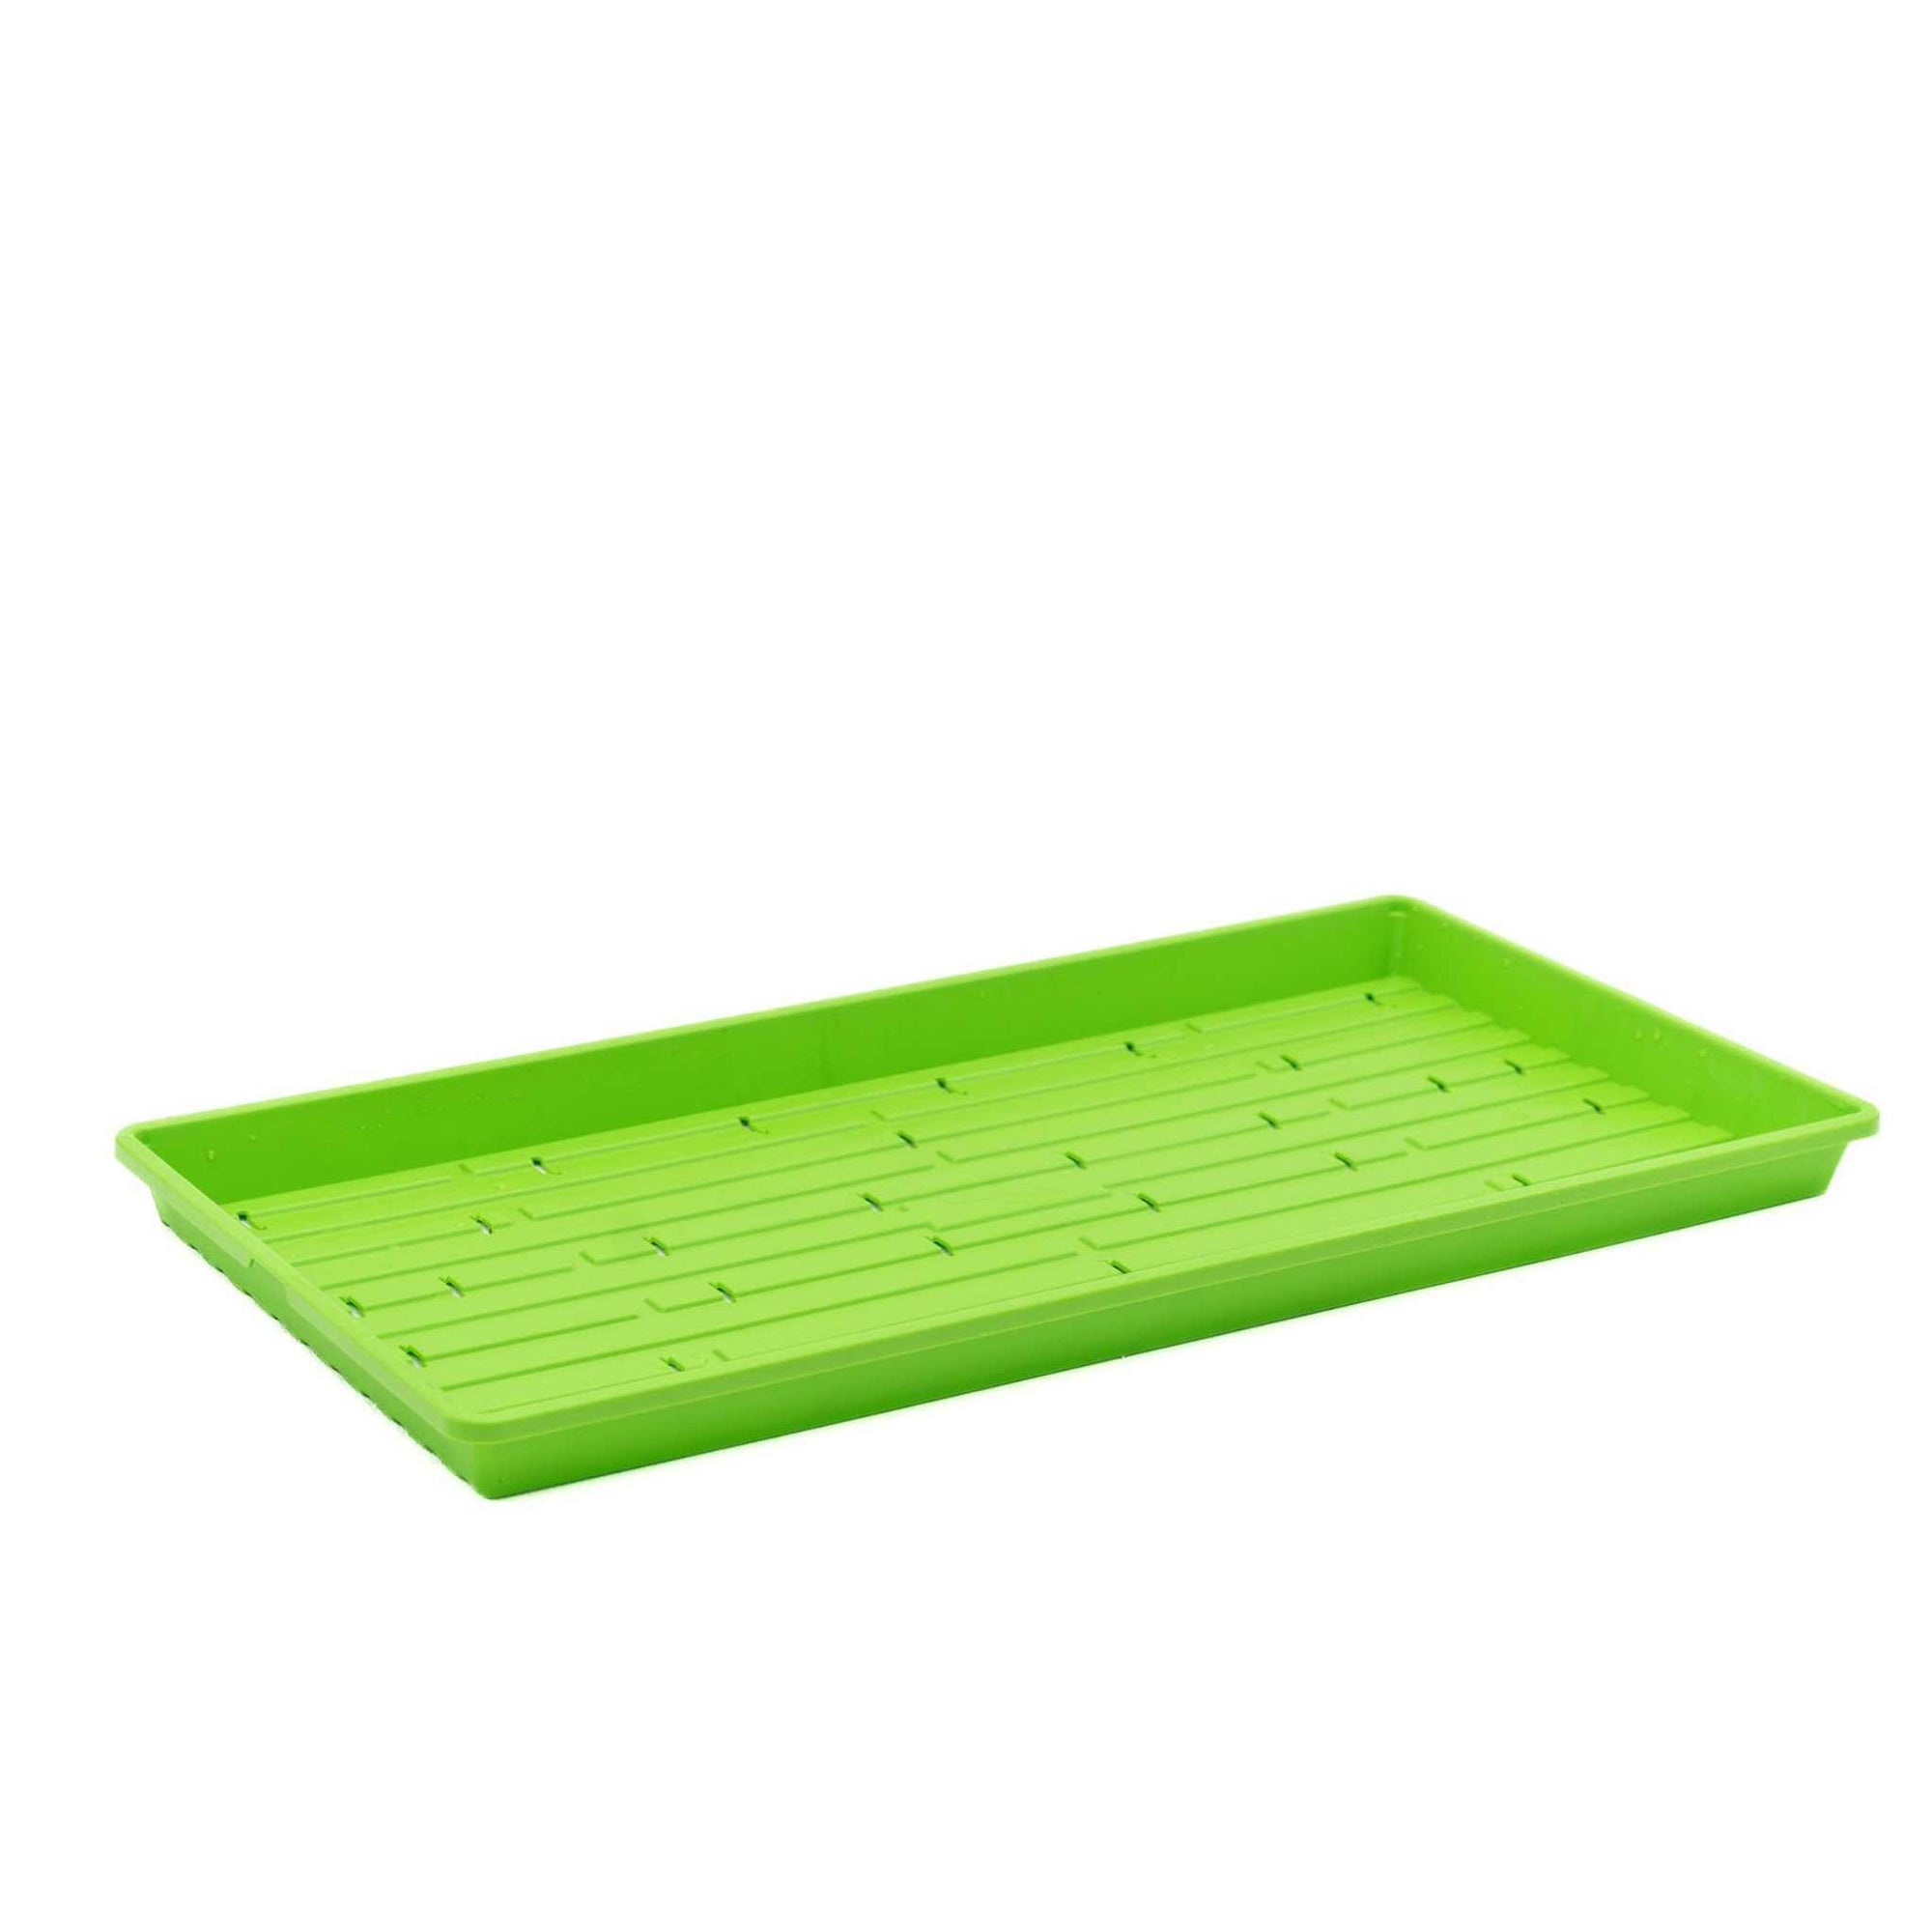 Green 020 Microgreen Tray Shallow With holes